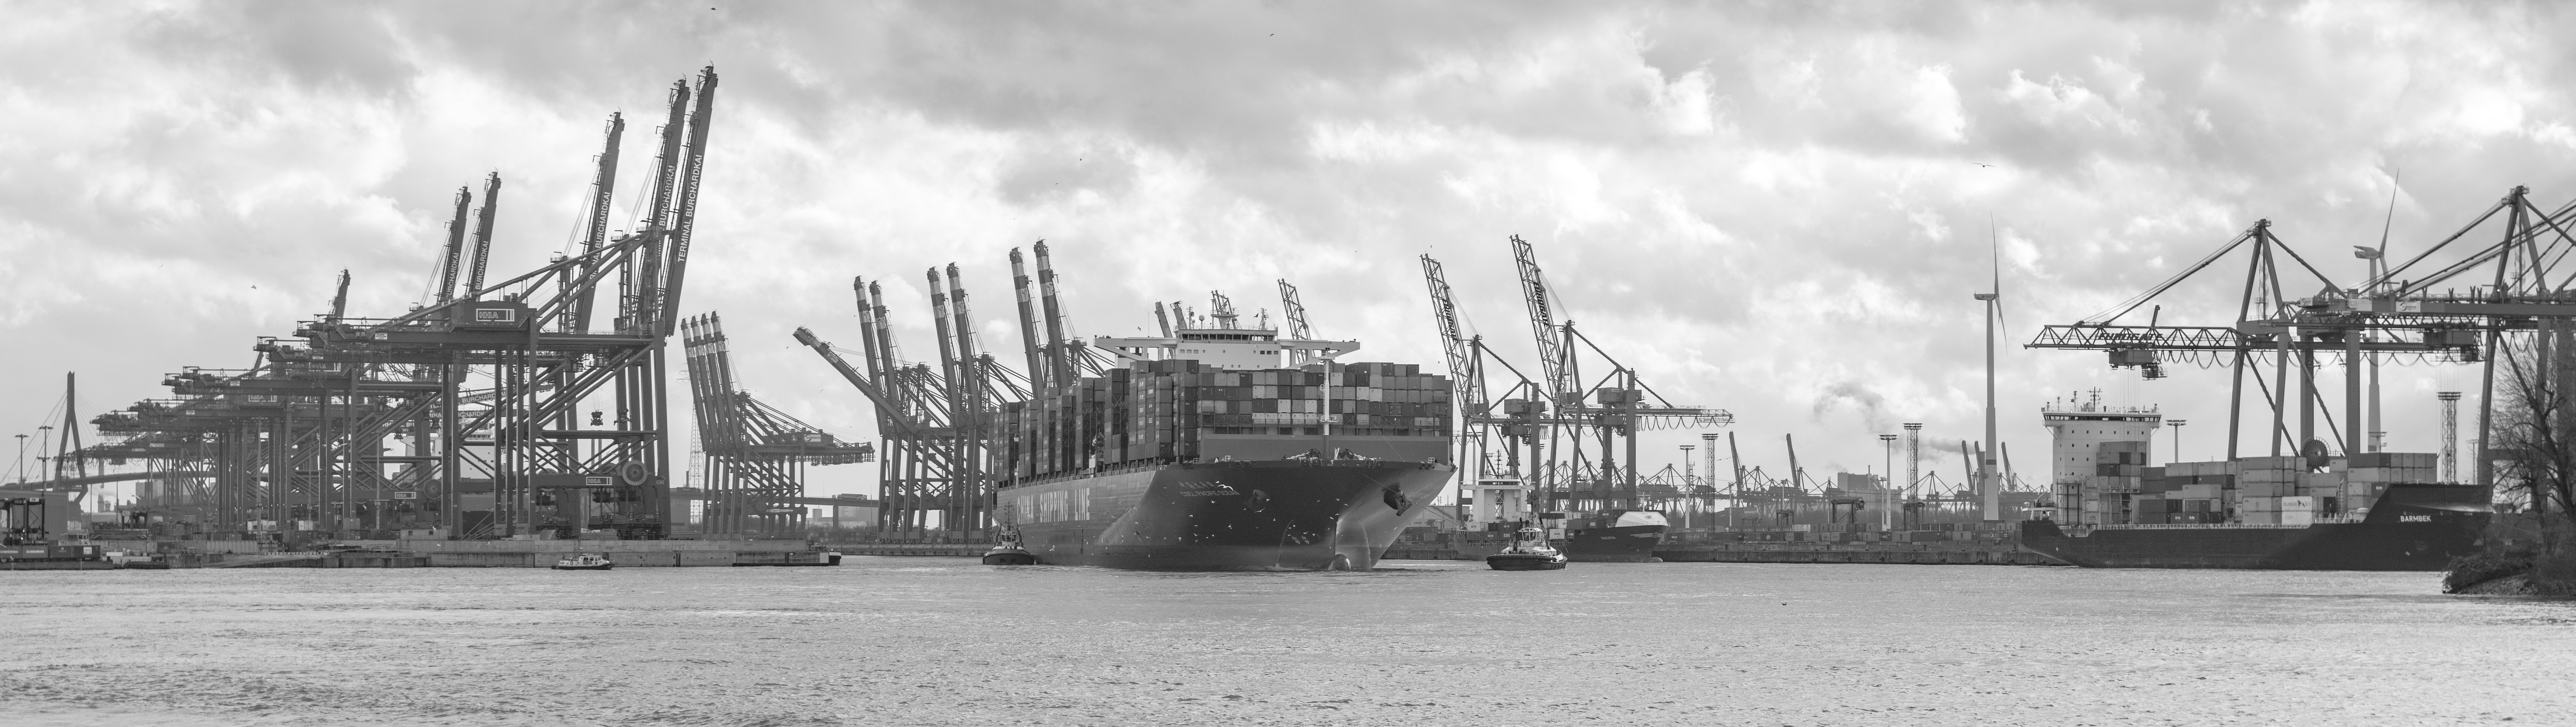 grayscale photo of docks